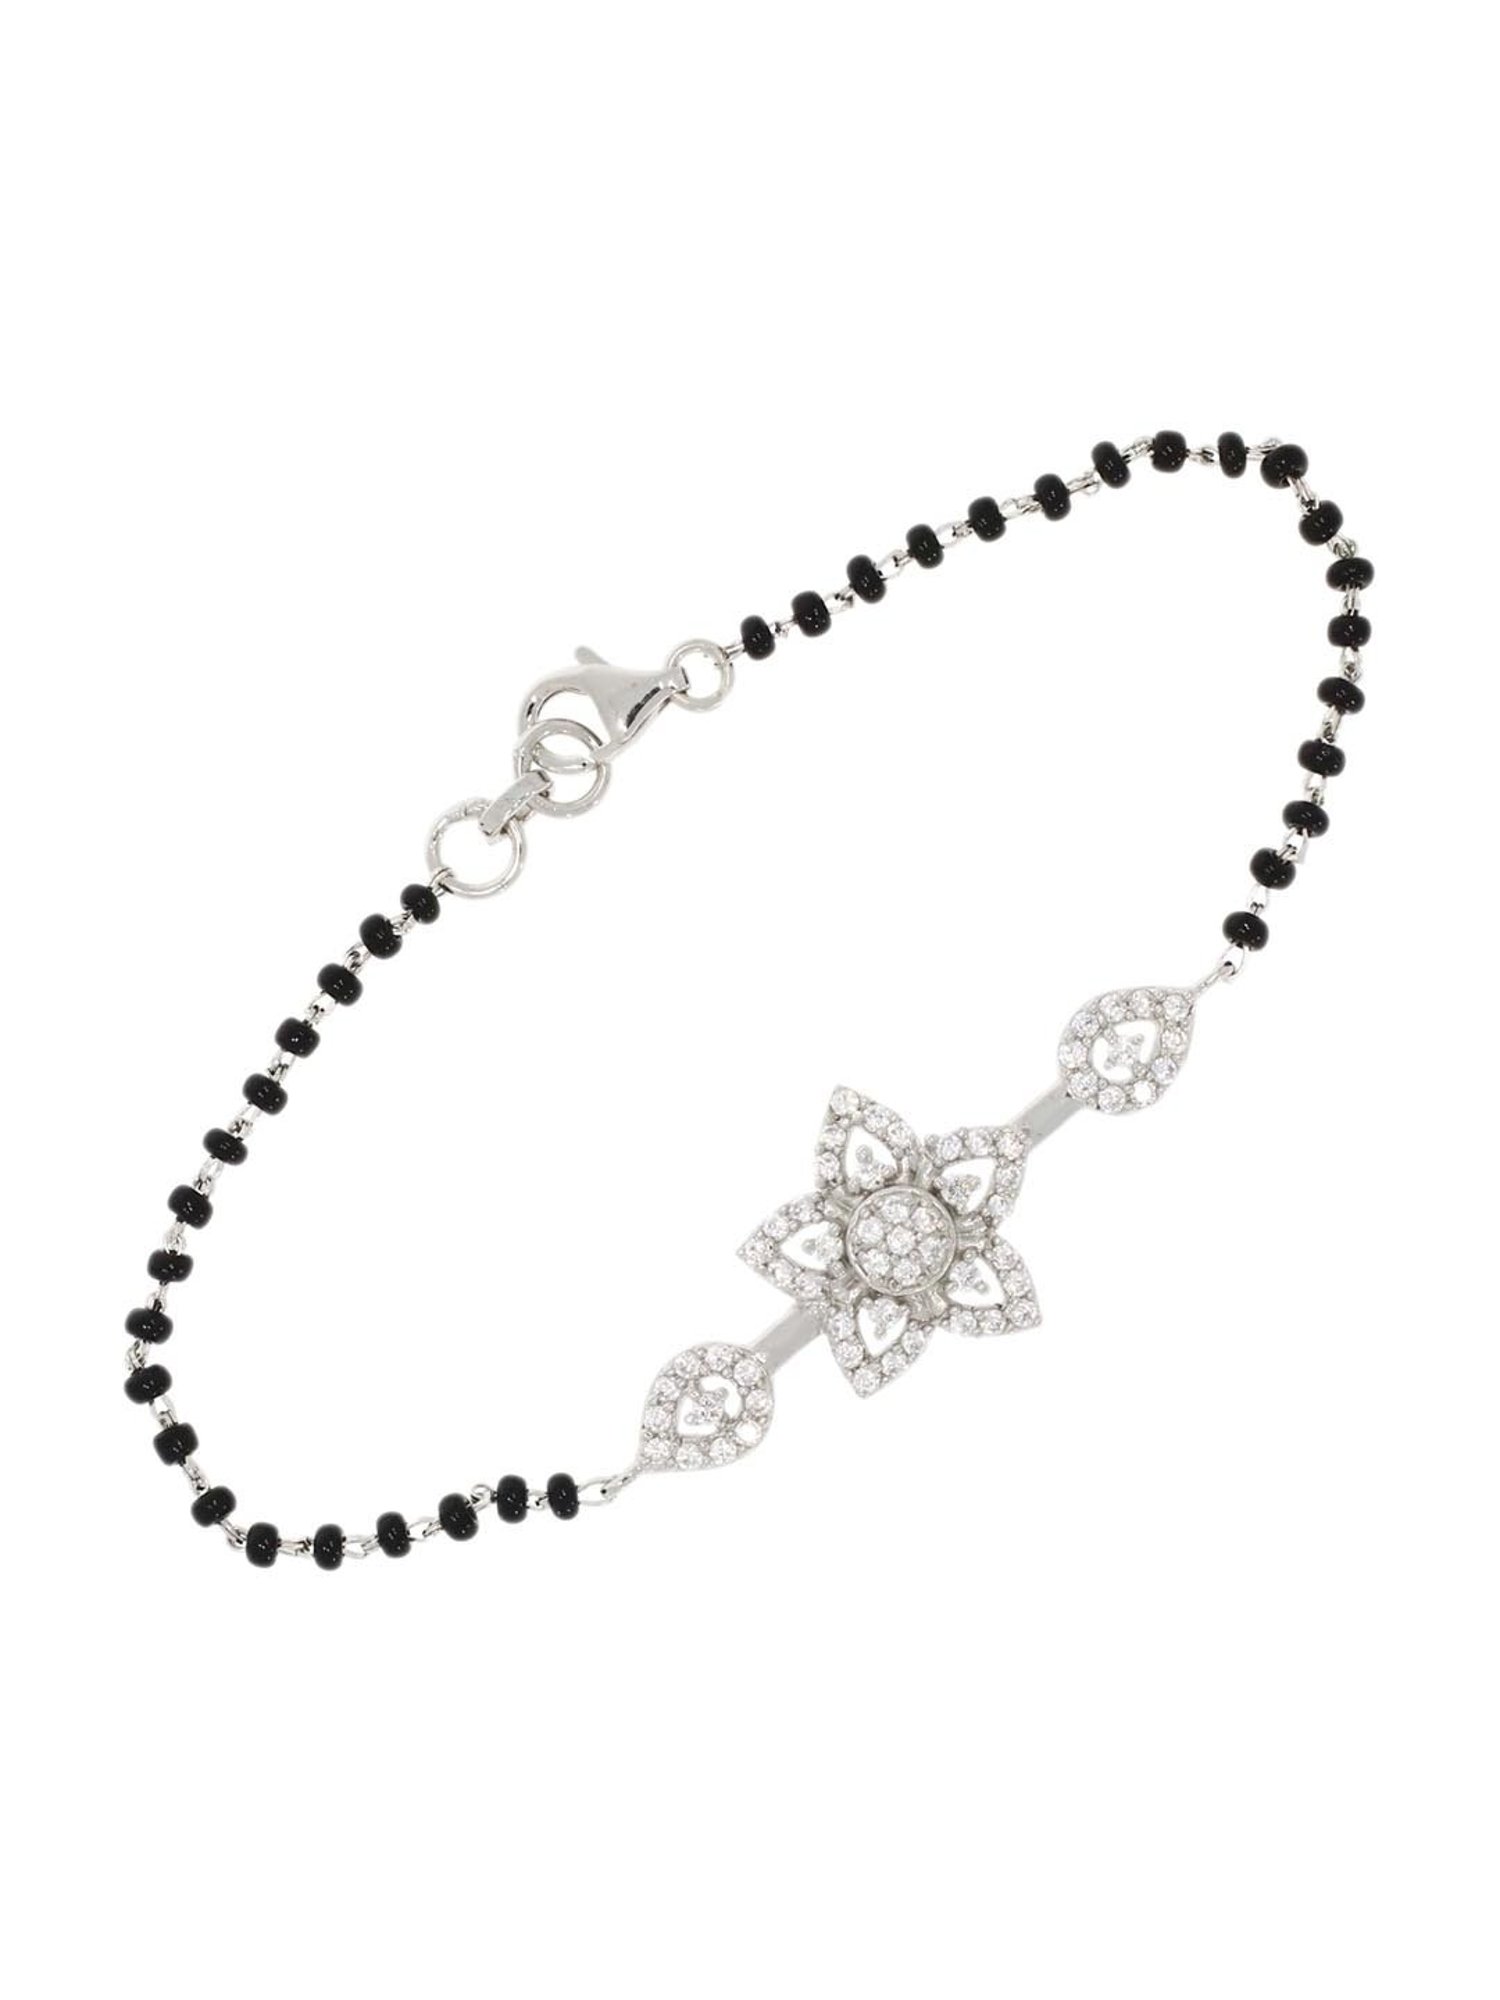 925 Silver Double Row Mangalsutra Bracelet with Zircon center units I  Shobitam Jewelry | Mangalsutra bracelet, Zircon, Black beads